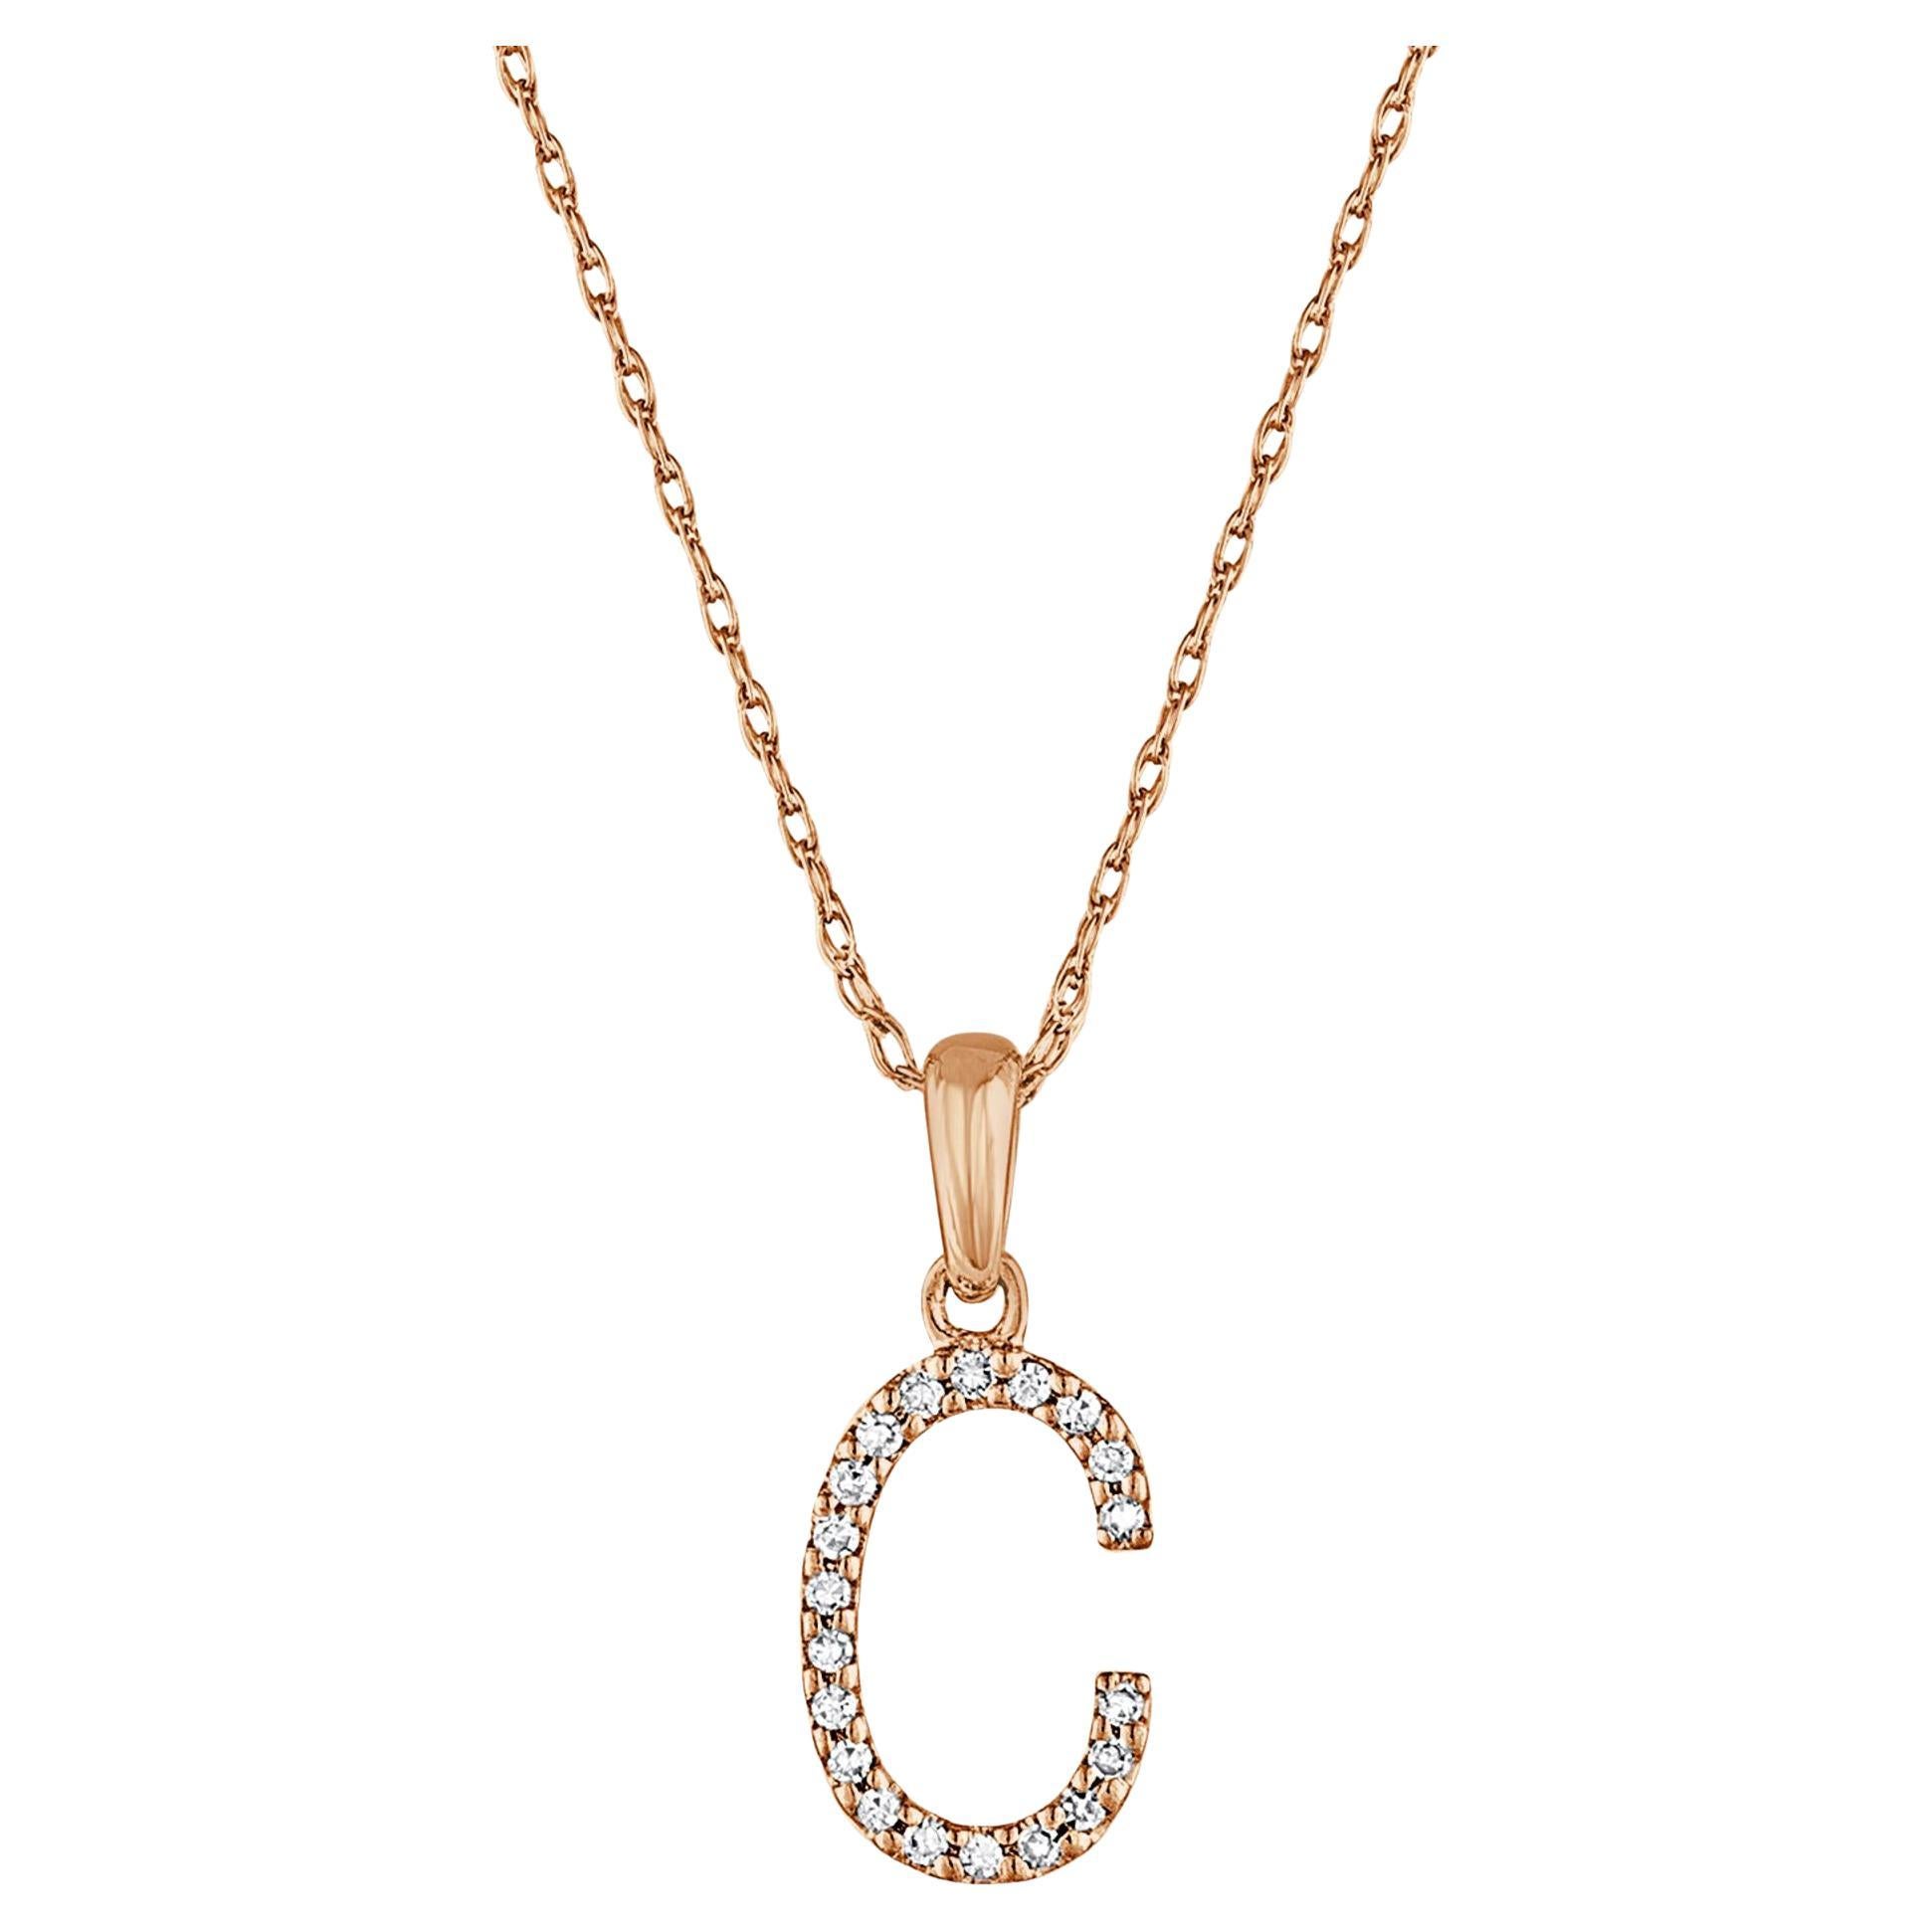 14 Karat Rose Gold 0.06 Carat Diamond Initial Pendant Necklace, Initial C